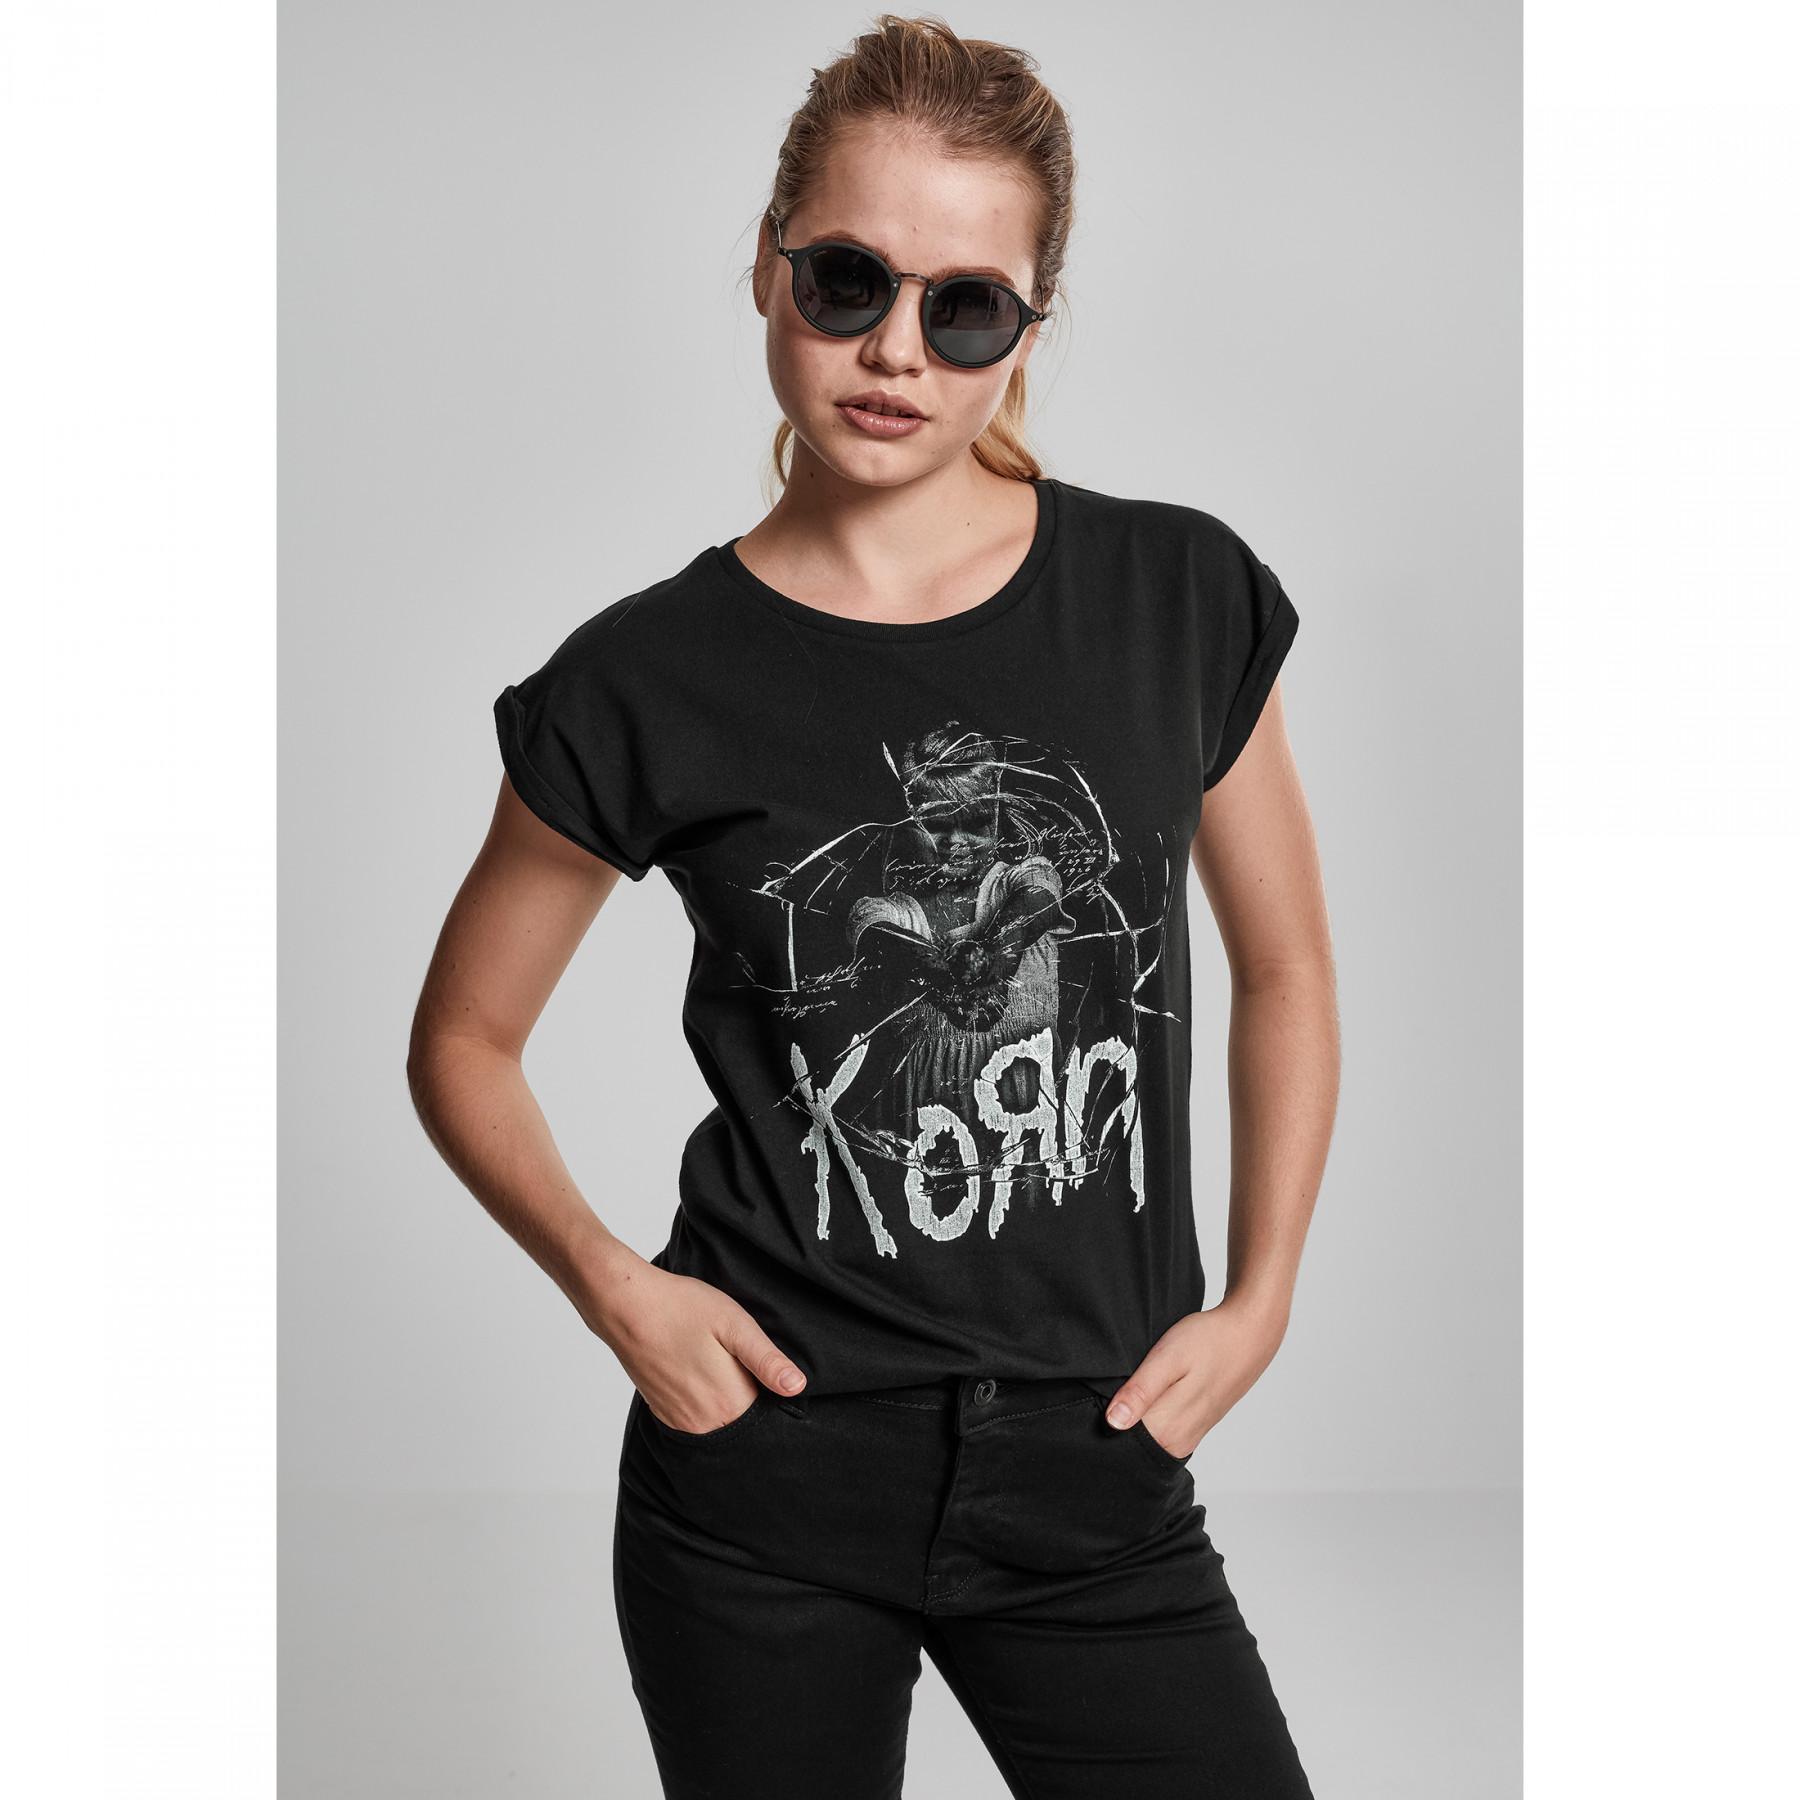 T-shirt femme Urban Classic korn craed gla